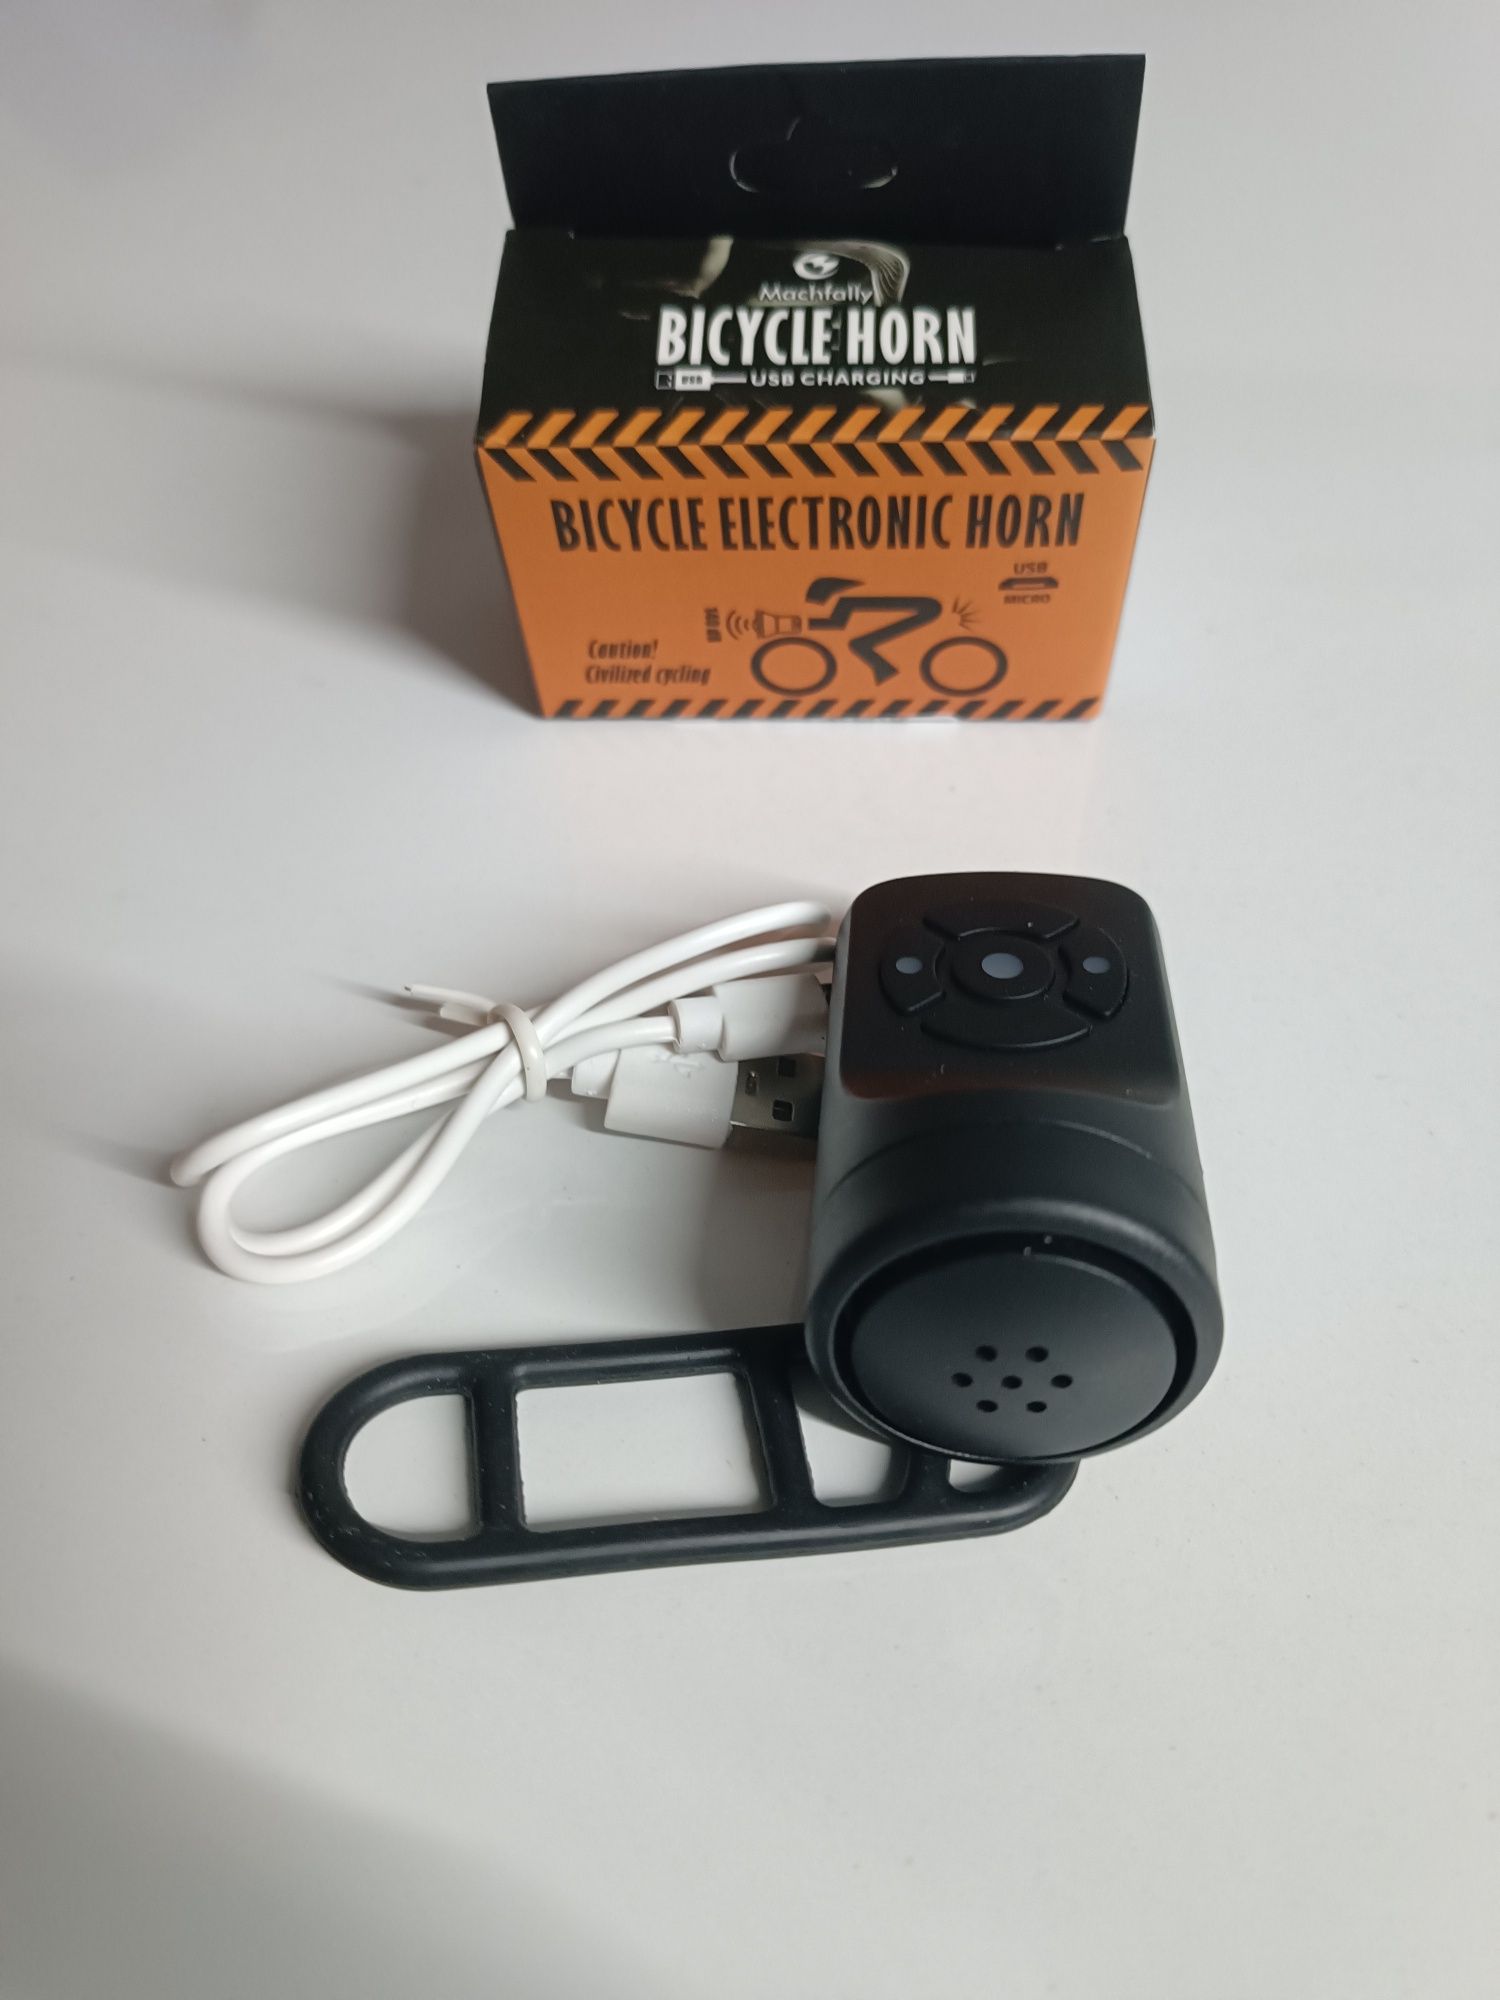 Buzina elétrica recarregável USB para bicicleta